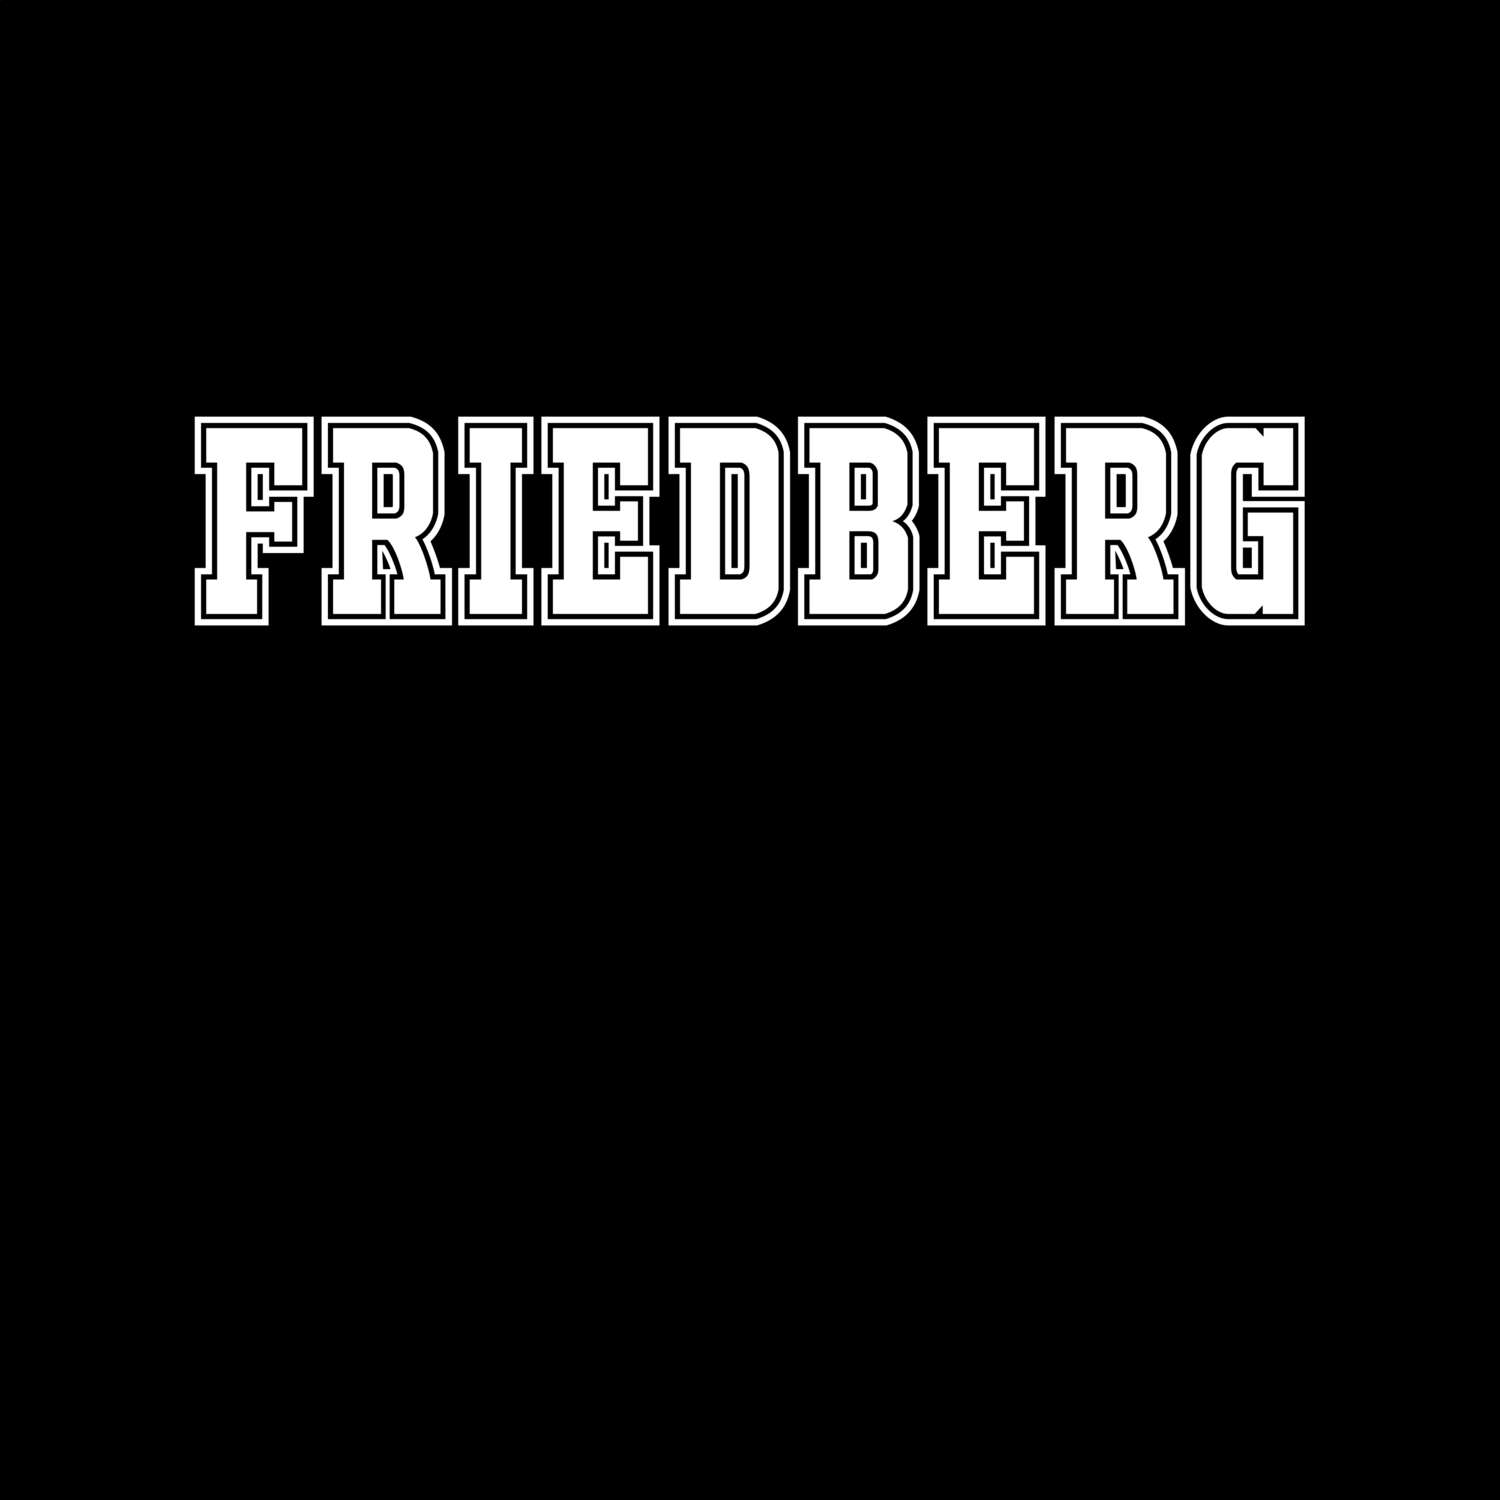 Friedberg T-Shirt »Classic«